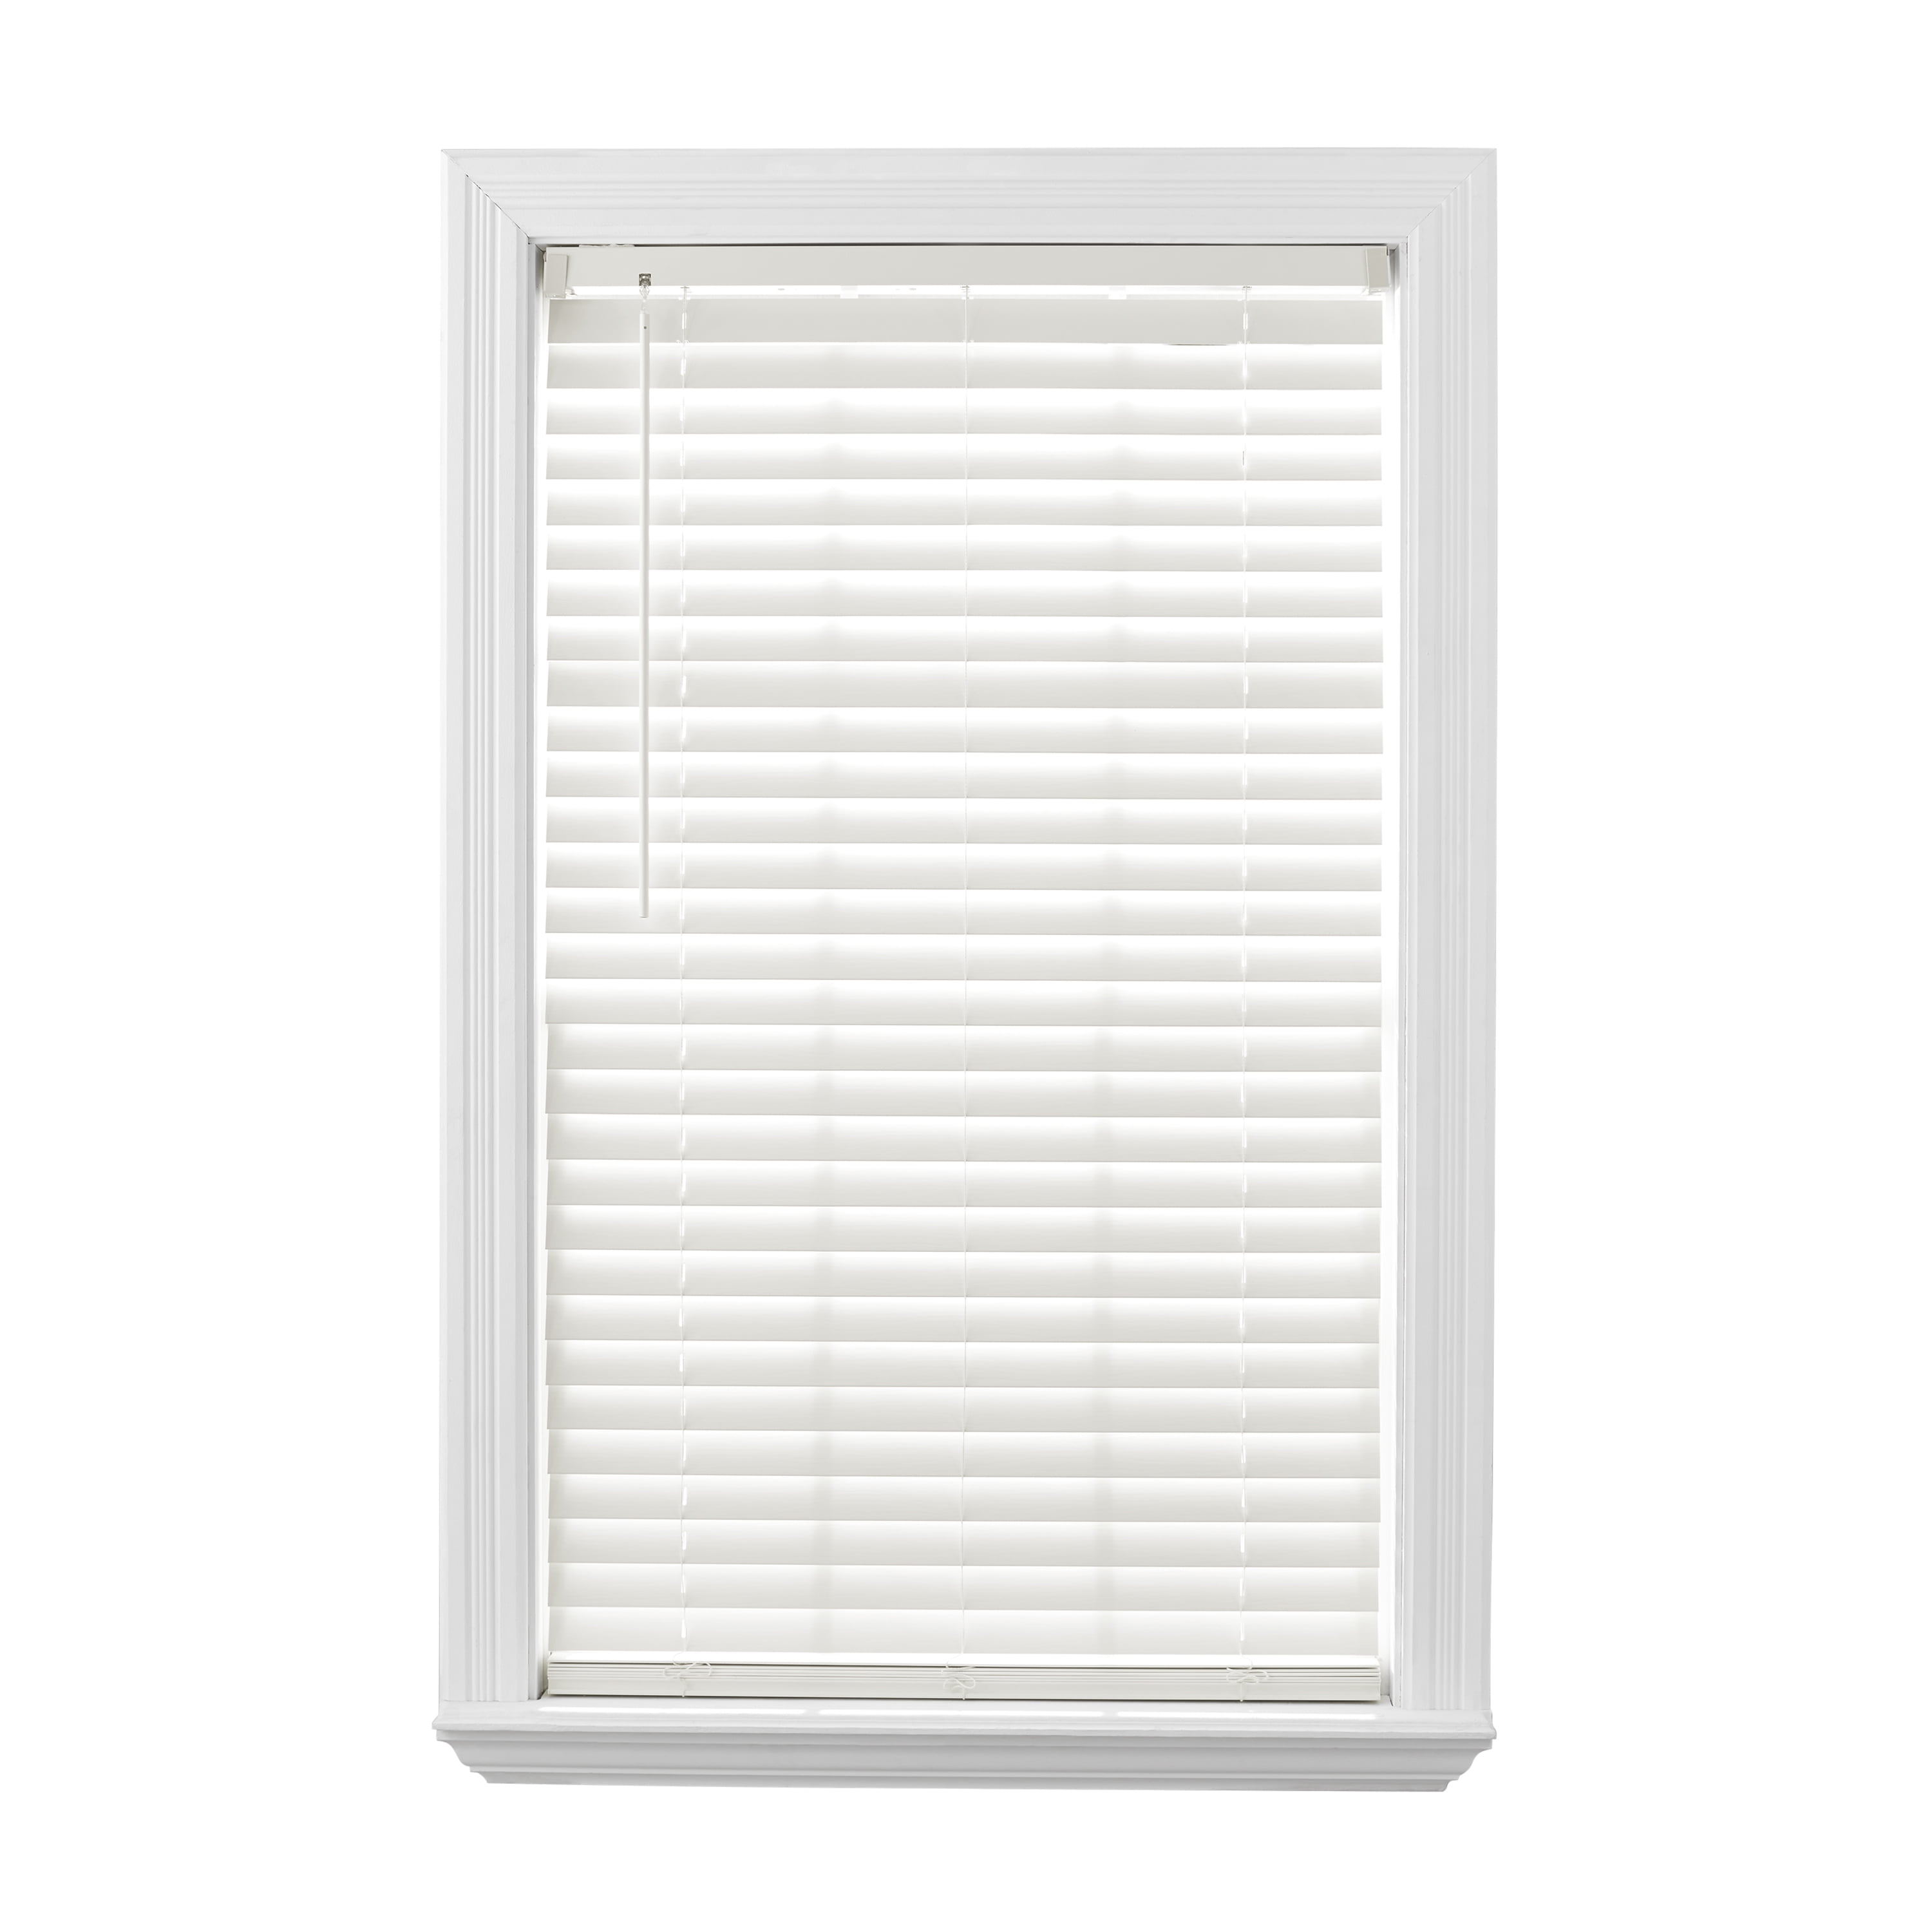 BRAND NEW 2" window Blinds 24W X 72L White Plantation style 